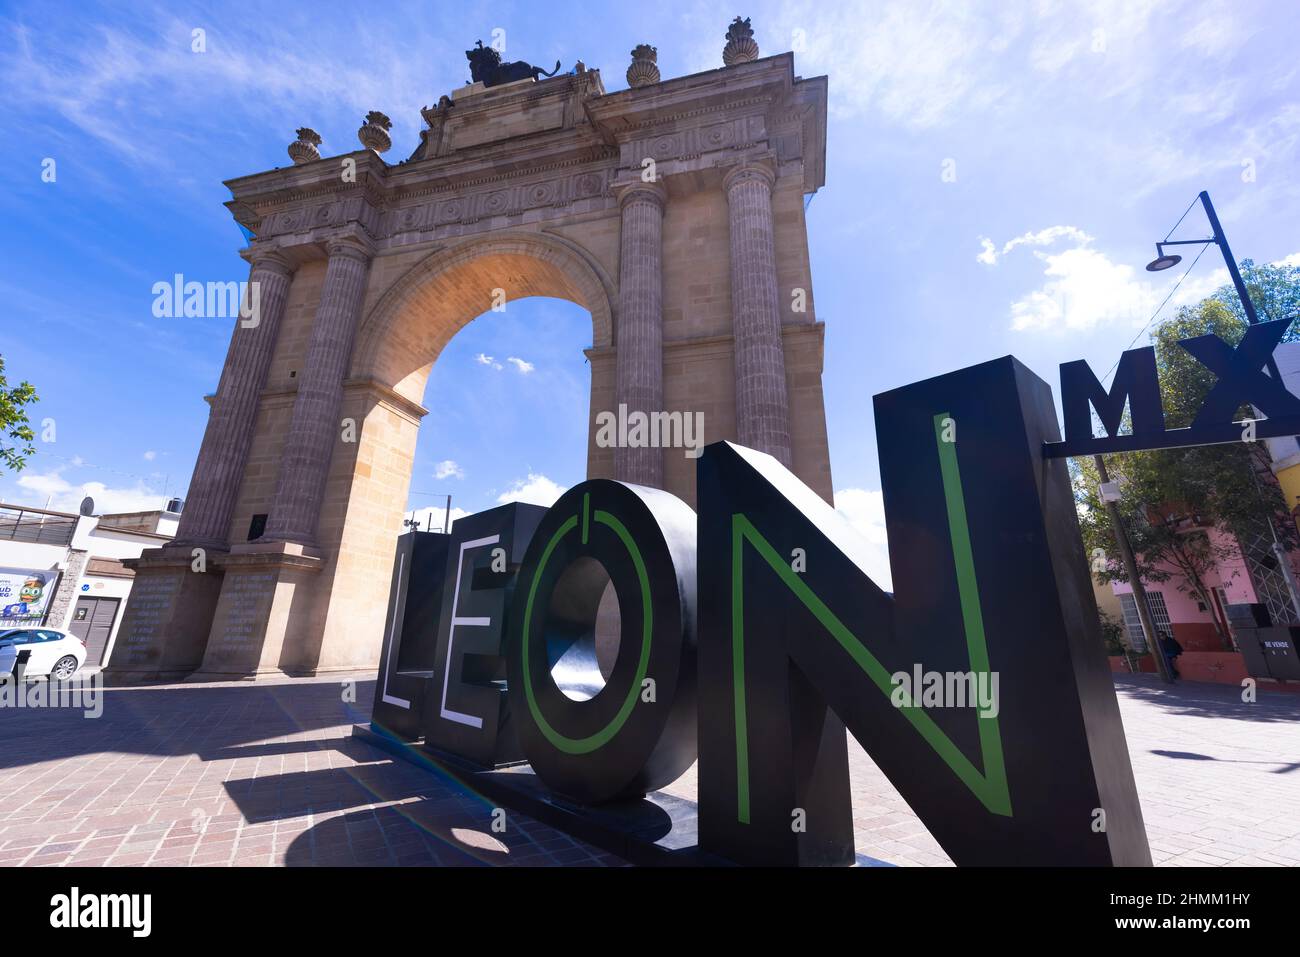 Leon, Mexico, 14 October, 2021: Leon landmark tourist attraction, monument Triumphal Arch of the City of Leon near historic city center Stock Photo